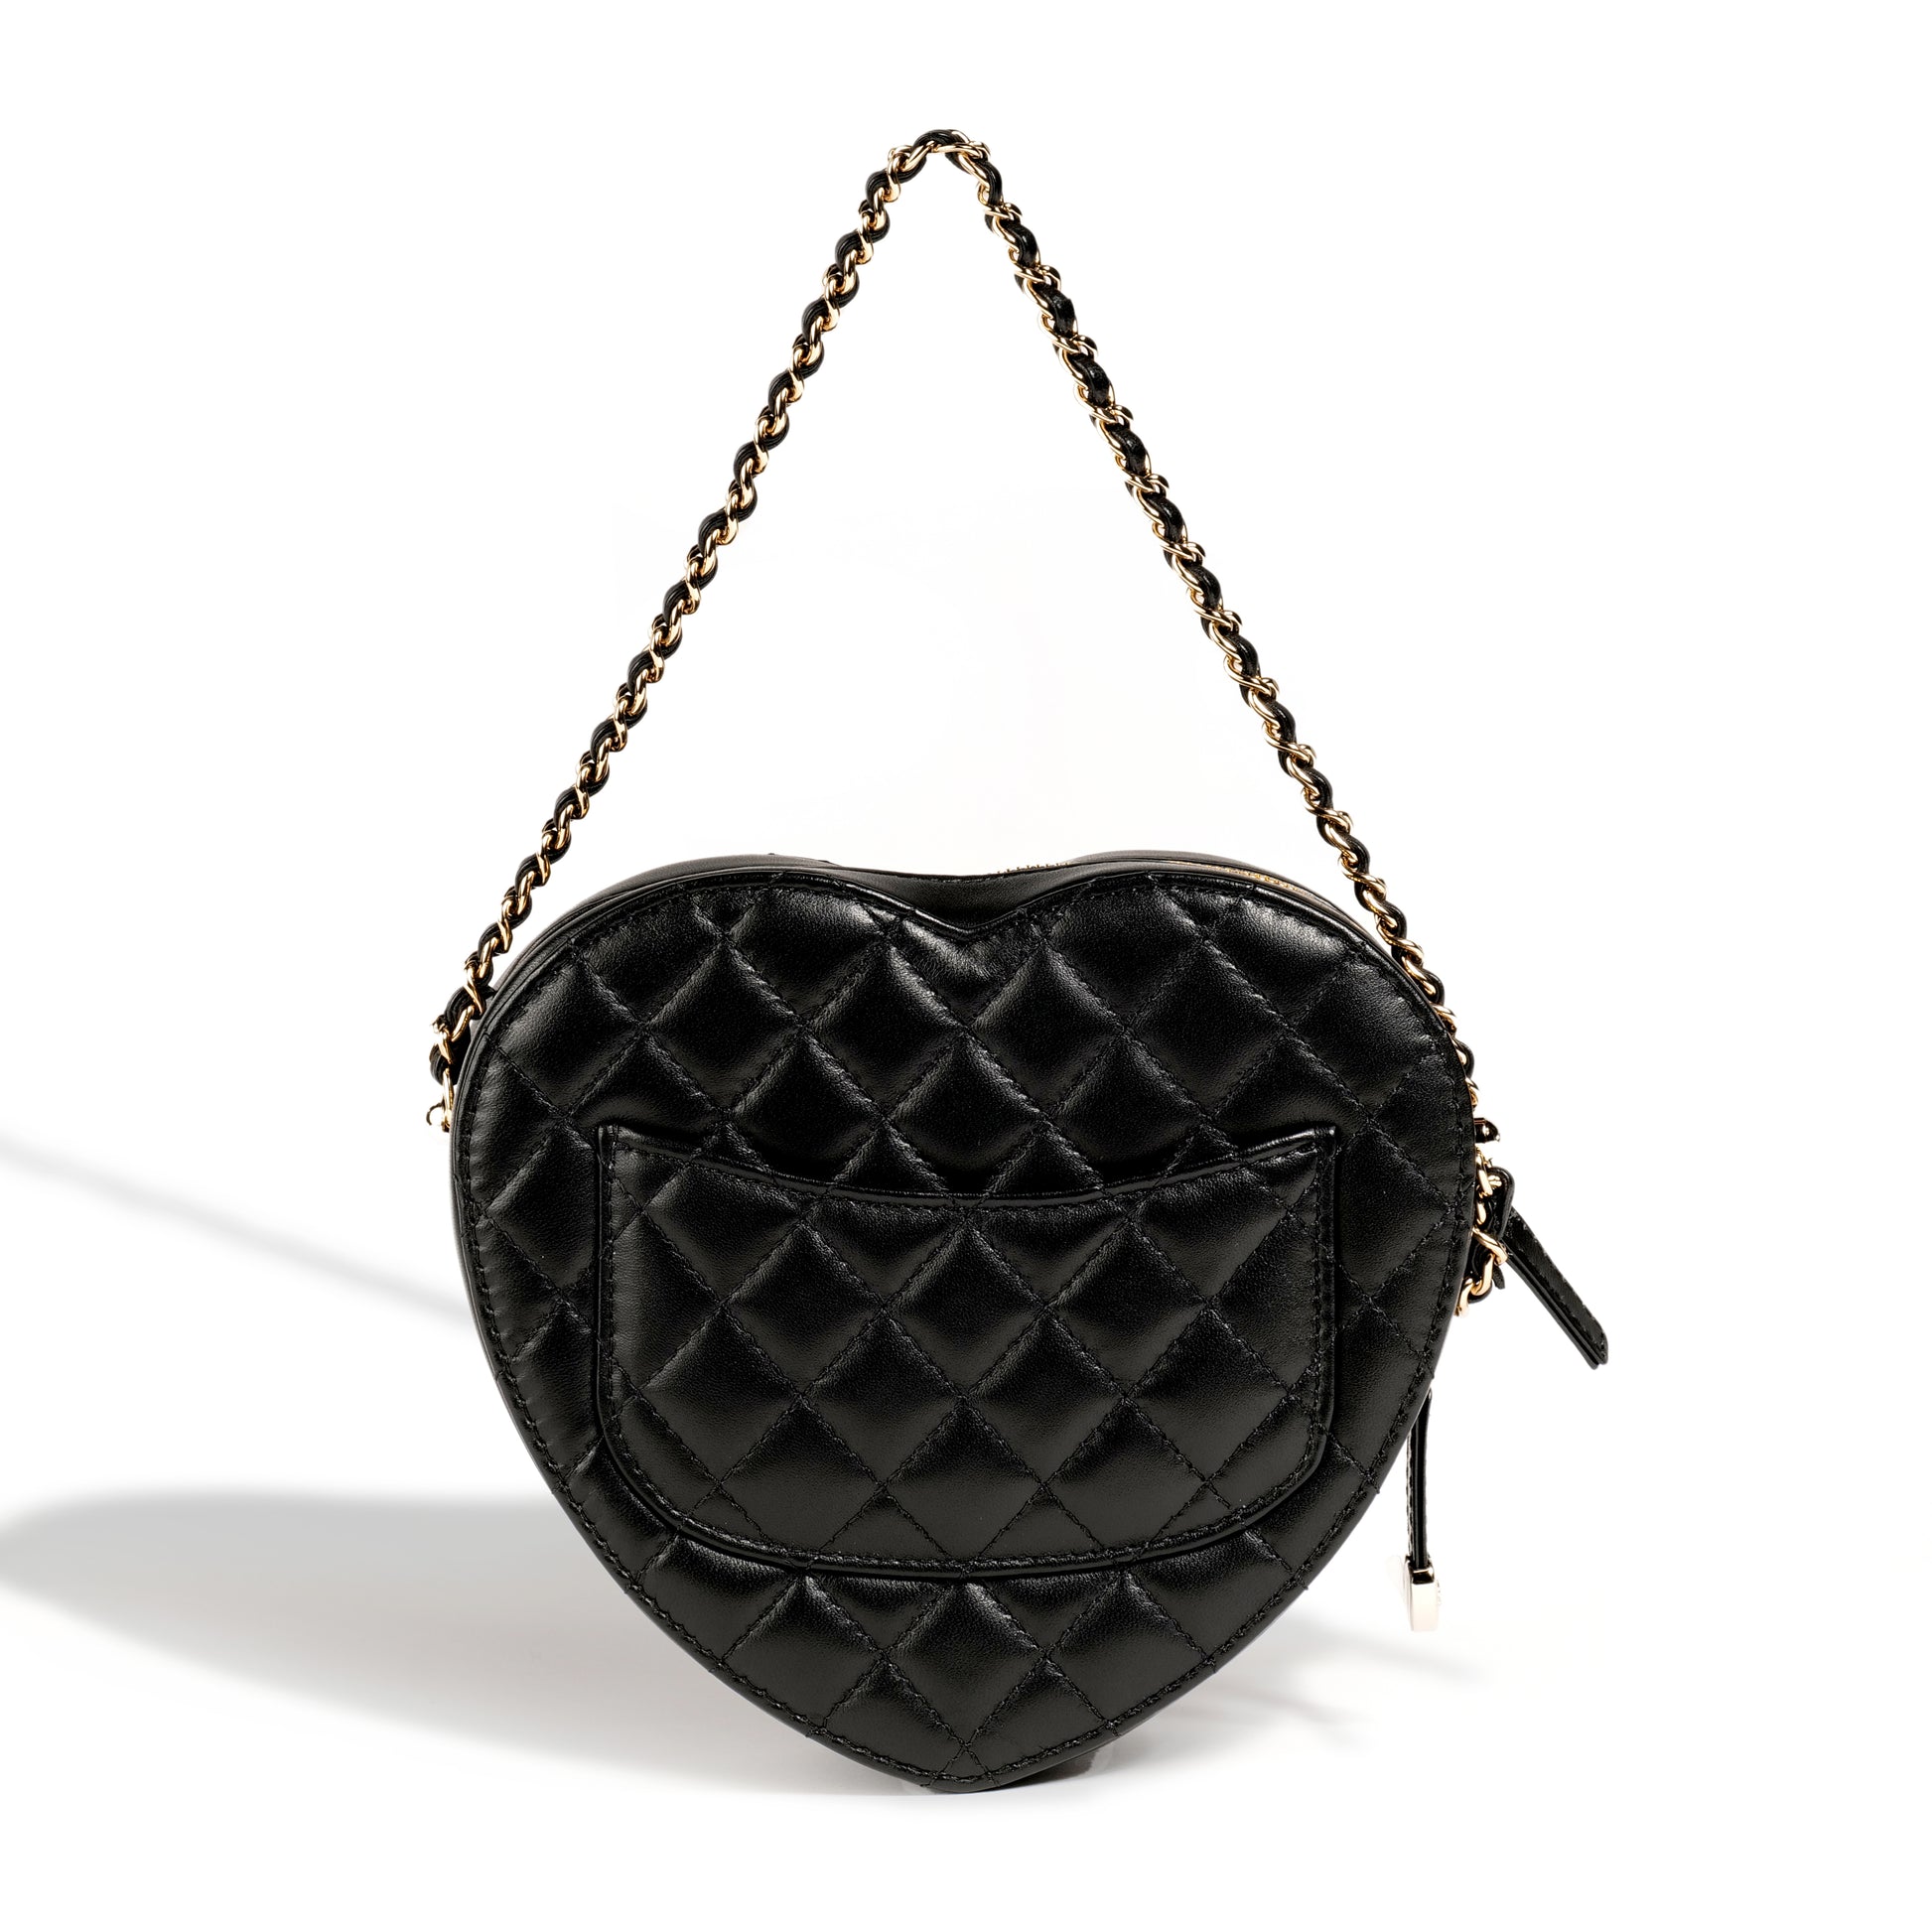 Chanel Black Heart Bag in Large Size – Diamonds in Dubai